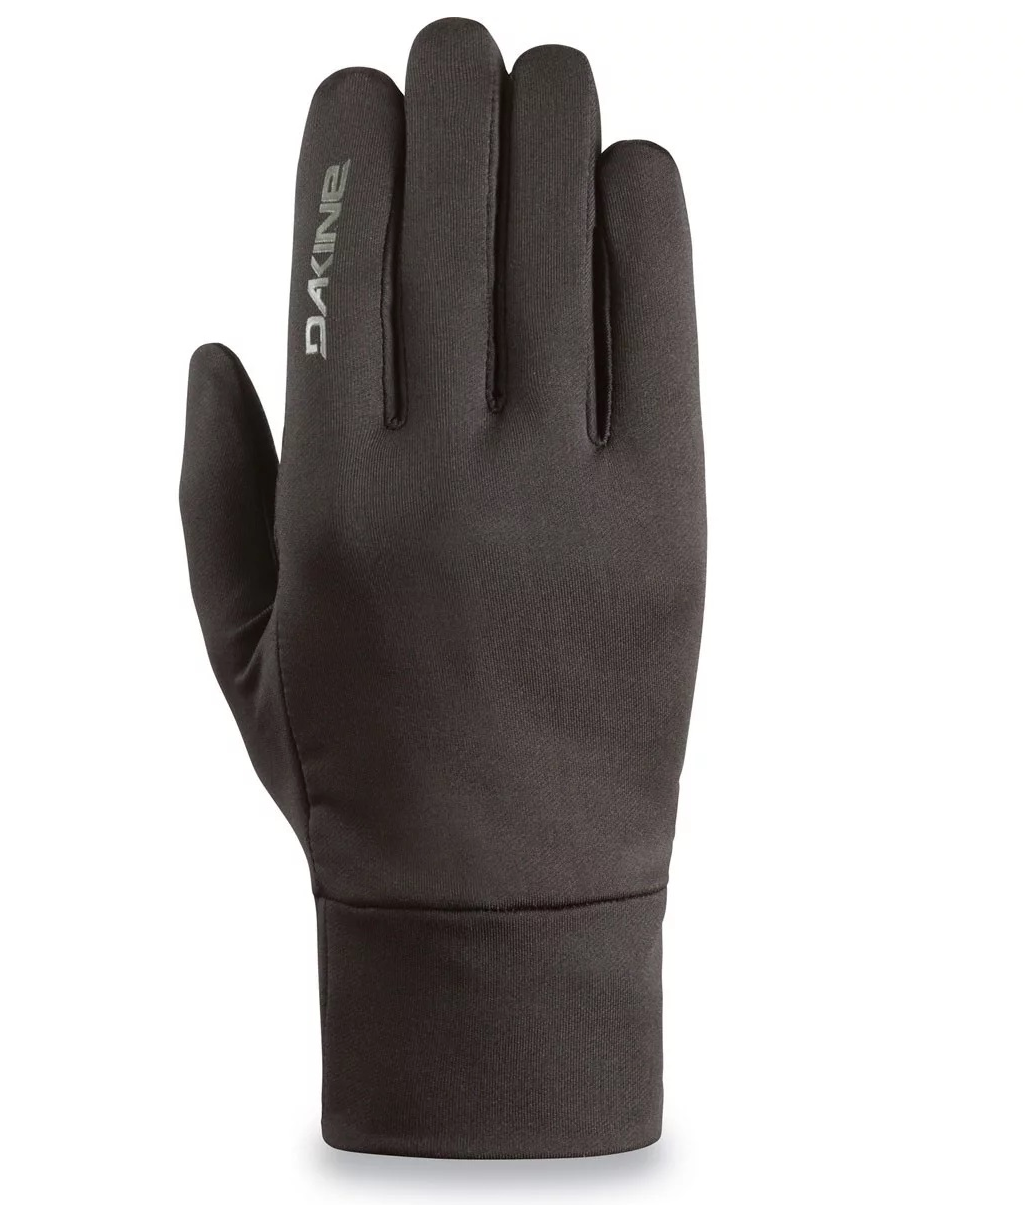 Titan GORE-TEX Glove Black